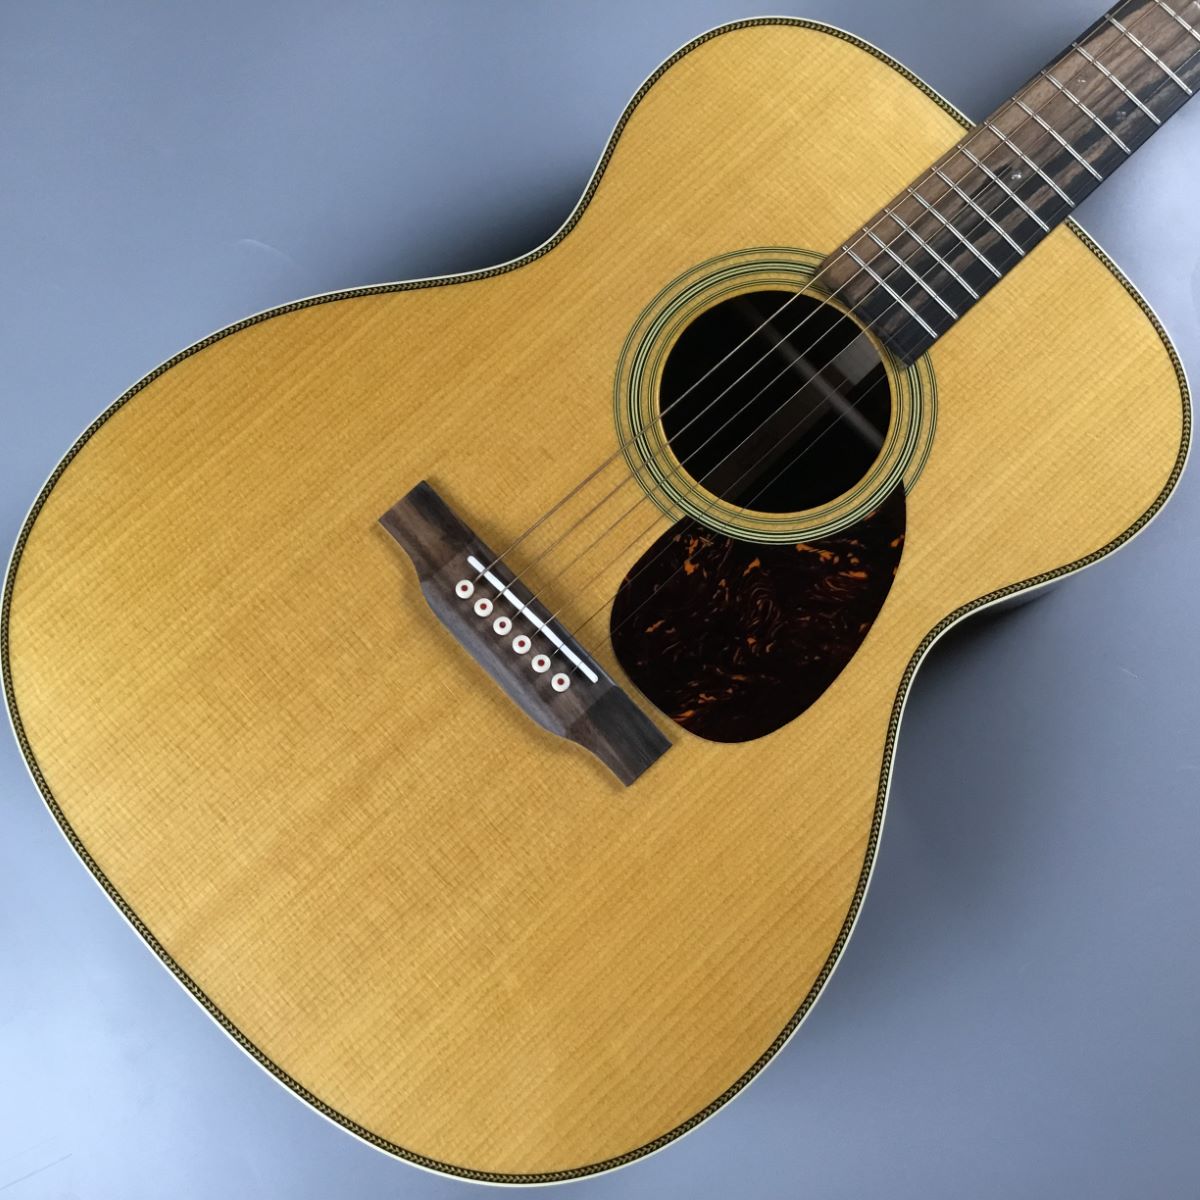 Martin OM-28 Standard アコースティックギター【マーチン】 マーチン